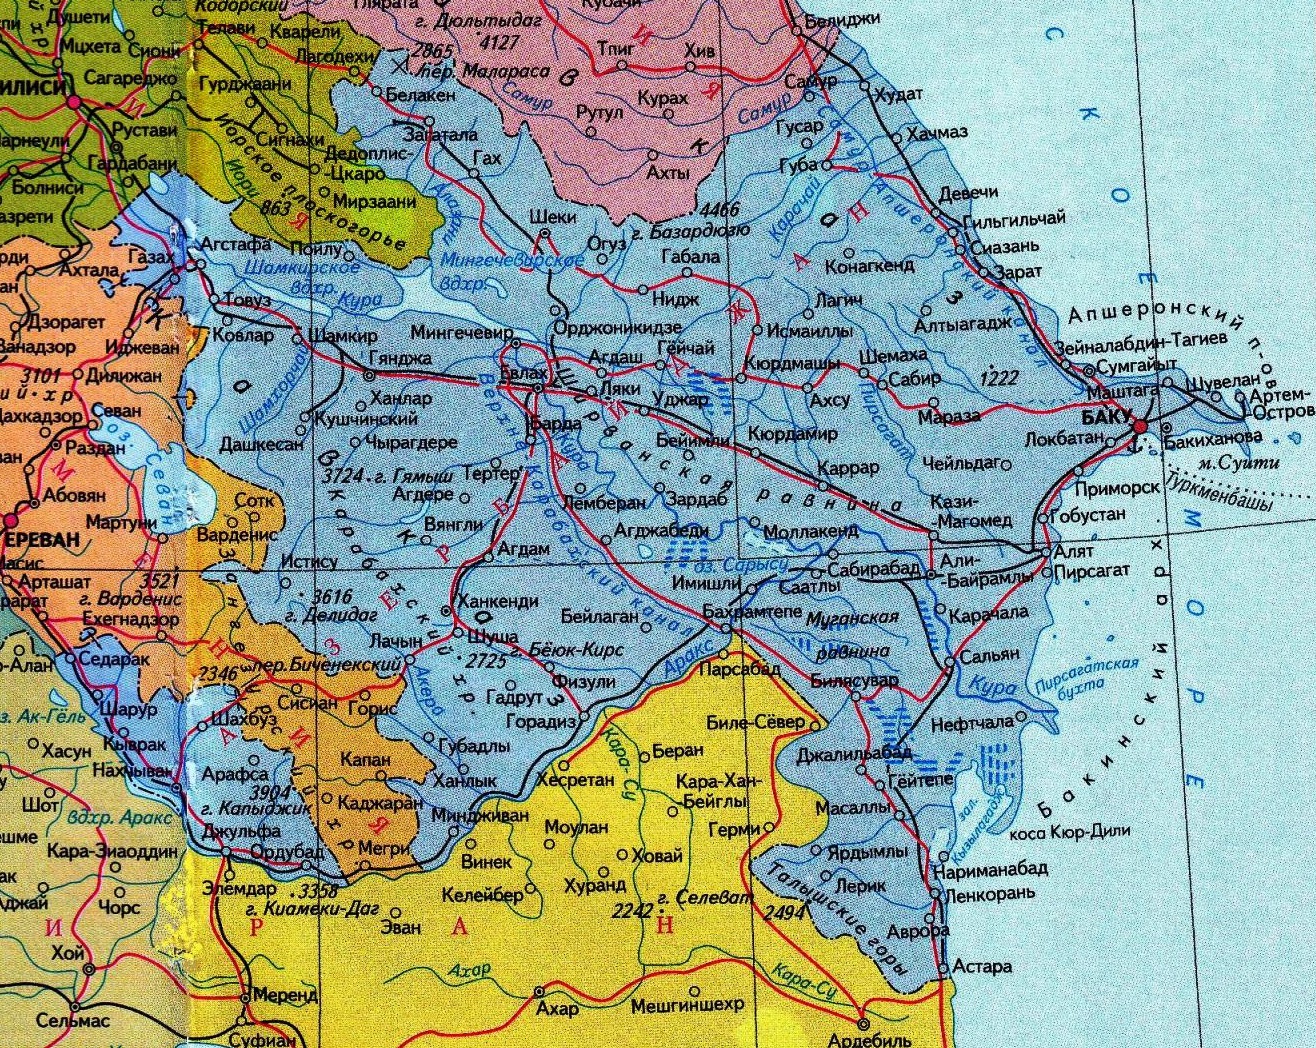 Подробная карта Азербайджана на русском языке